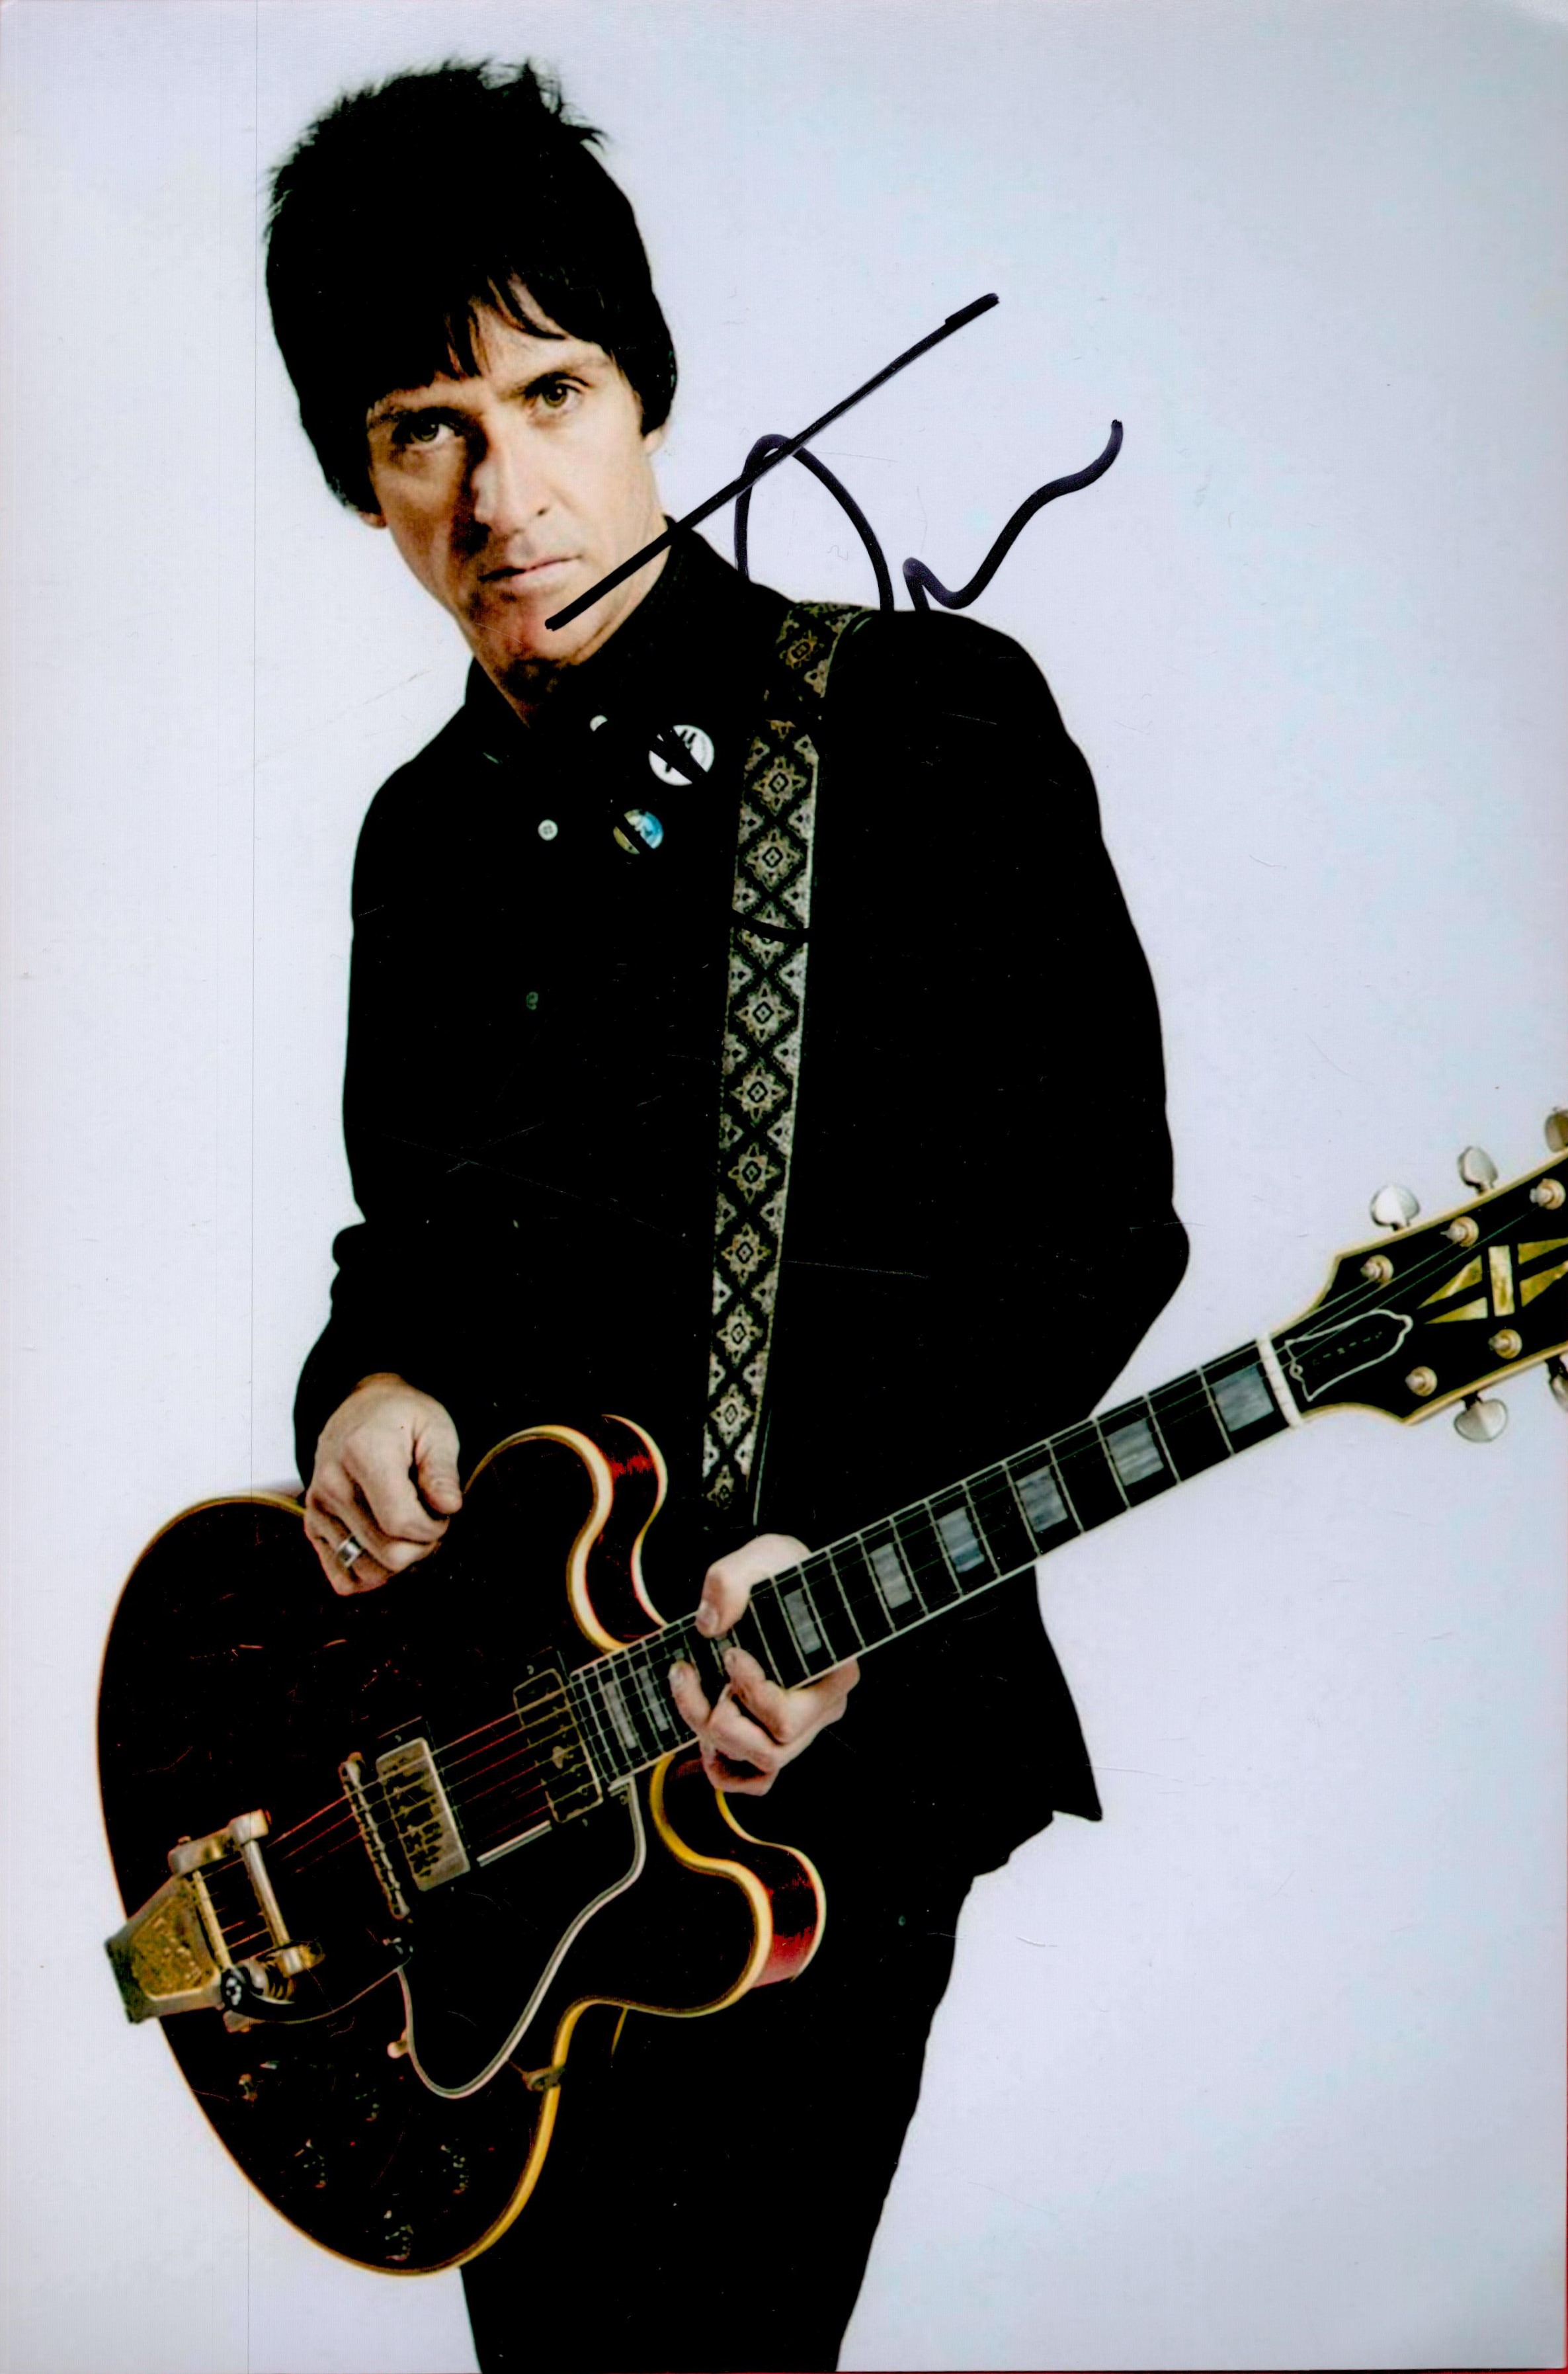 Johnny Marr signed 12x8 colour photo. Johnny Marr (born John Martin Maher, 31 October 1963) is an